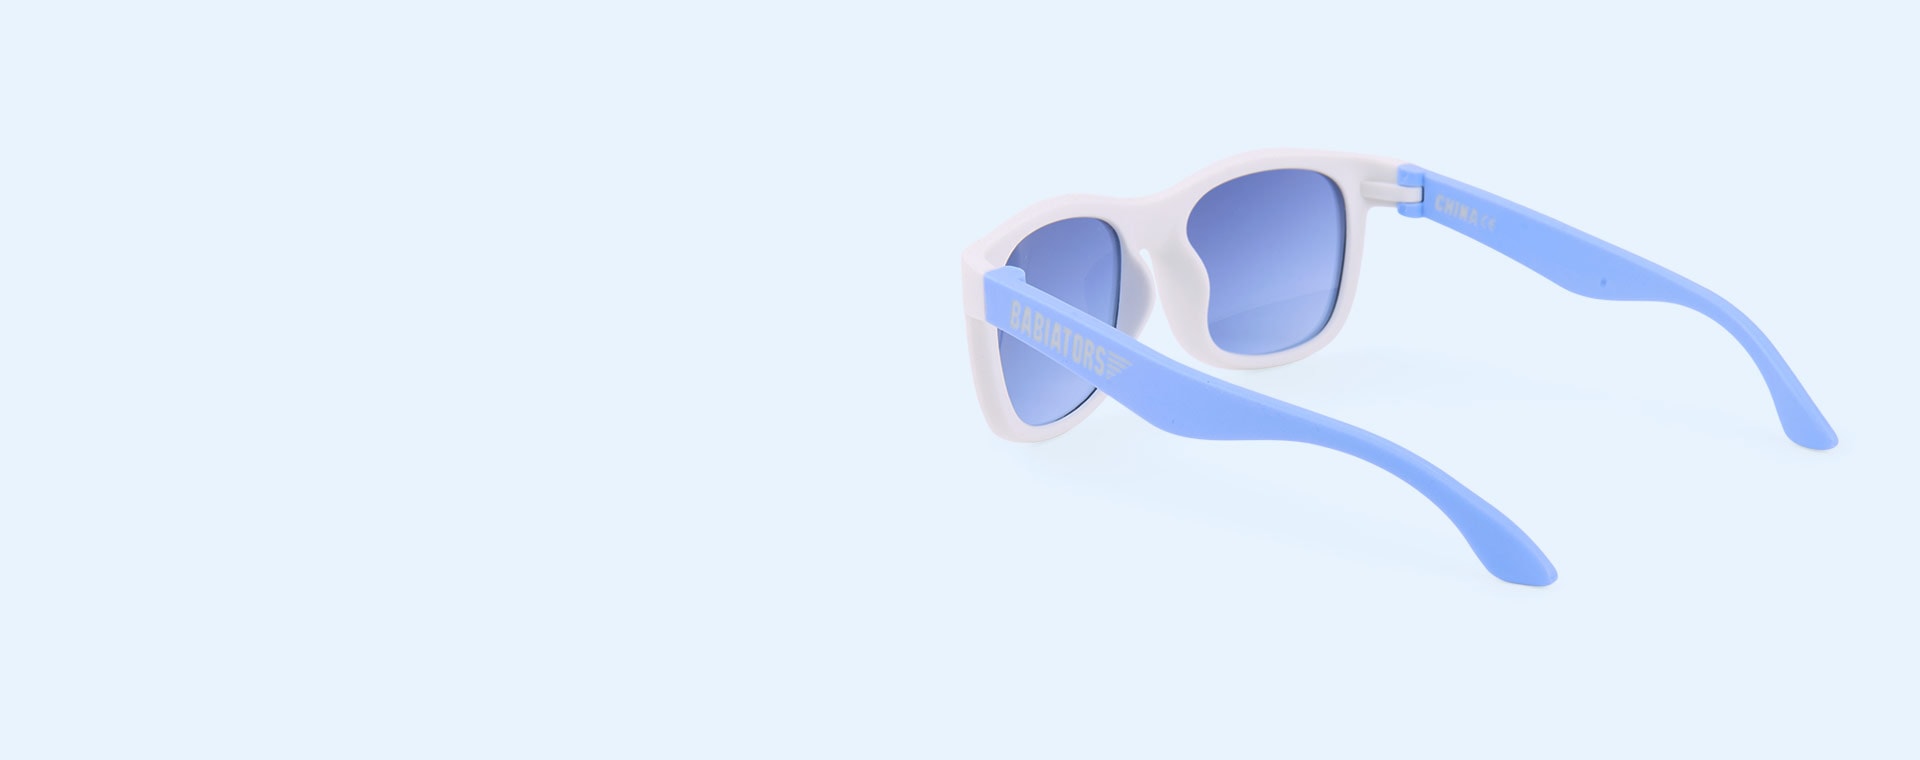 Fade To Blue Babiators Navigator Limited Edition Colourblock Sunglasses